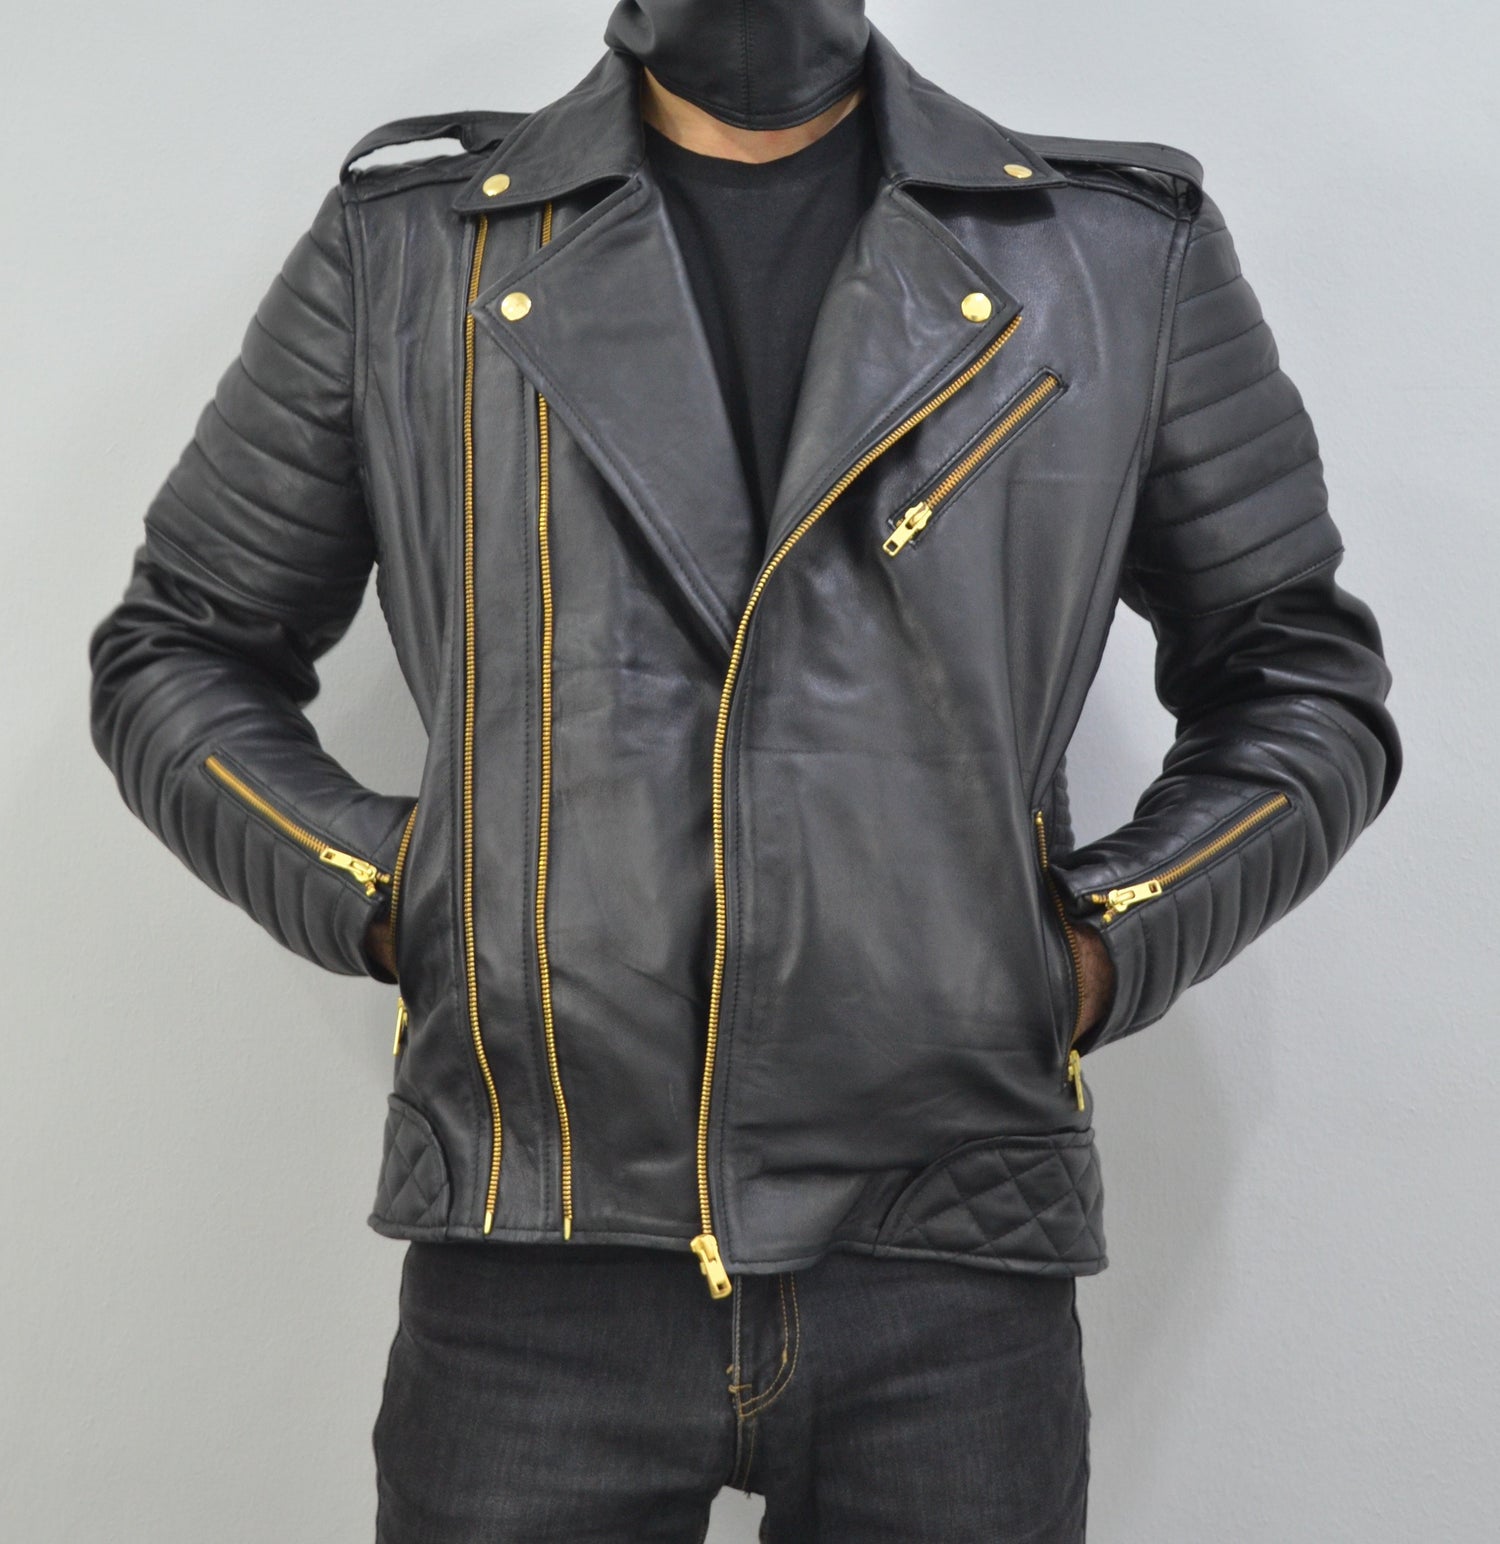 Custom Made Snake Plissken Escape from New York Biker jacket – Wested  Leather Co